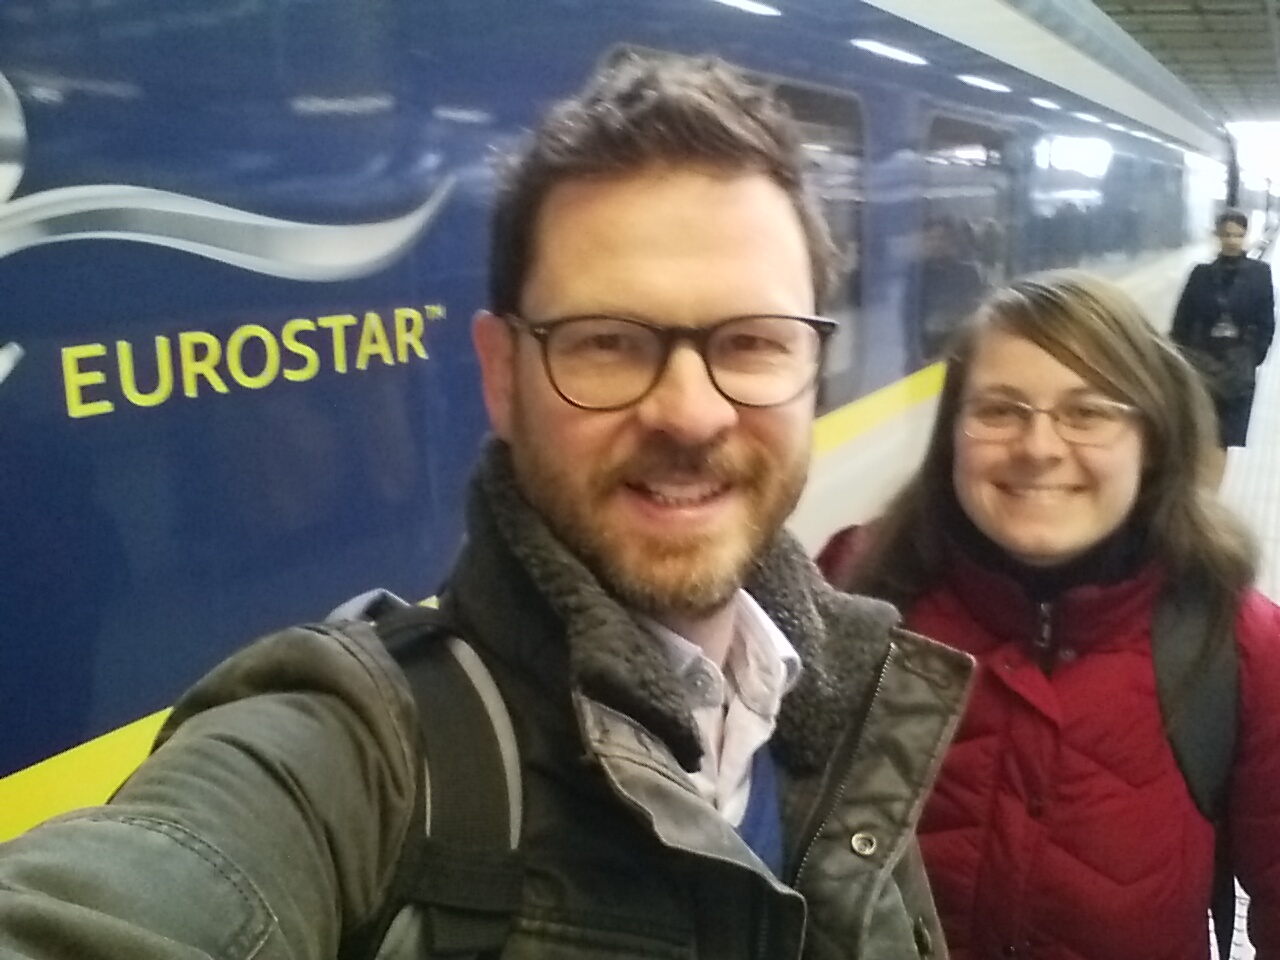 Selfie in front of the Eurostar